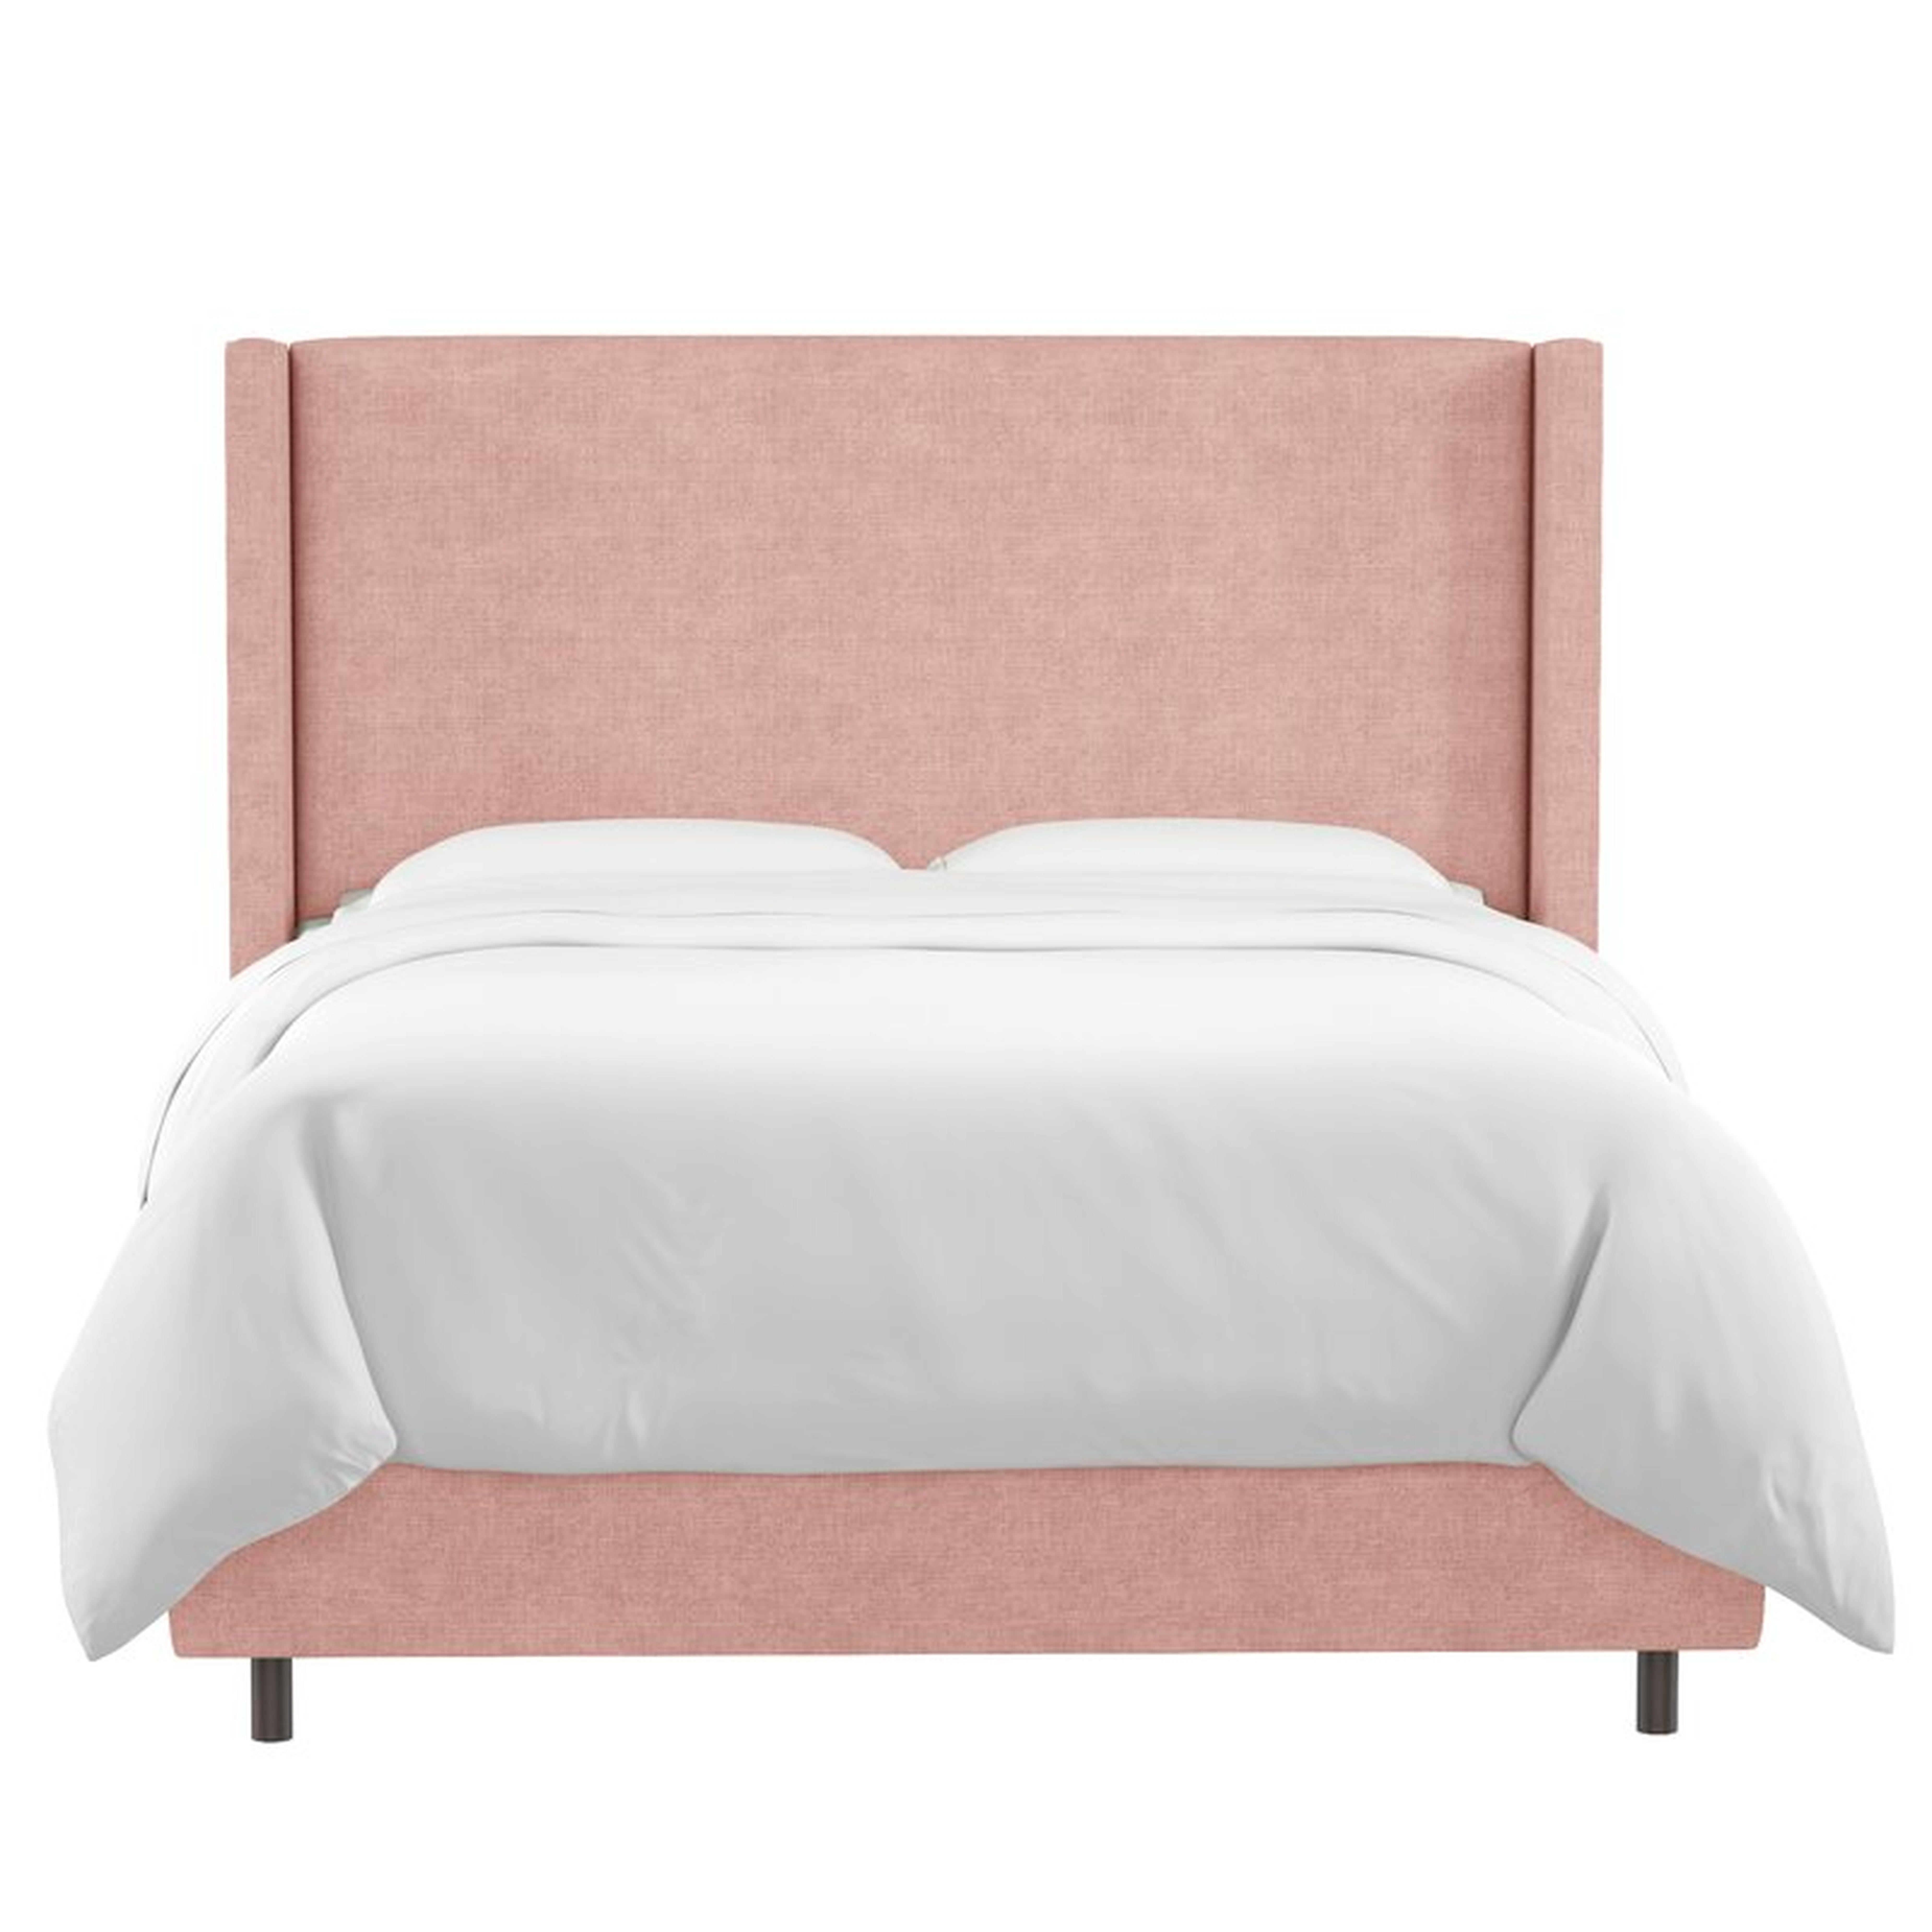 Amera Upholstered Low Profile Standard Bed - Wayfair